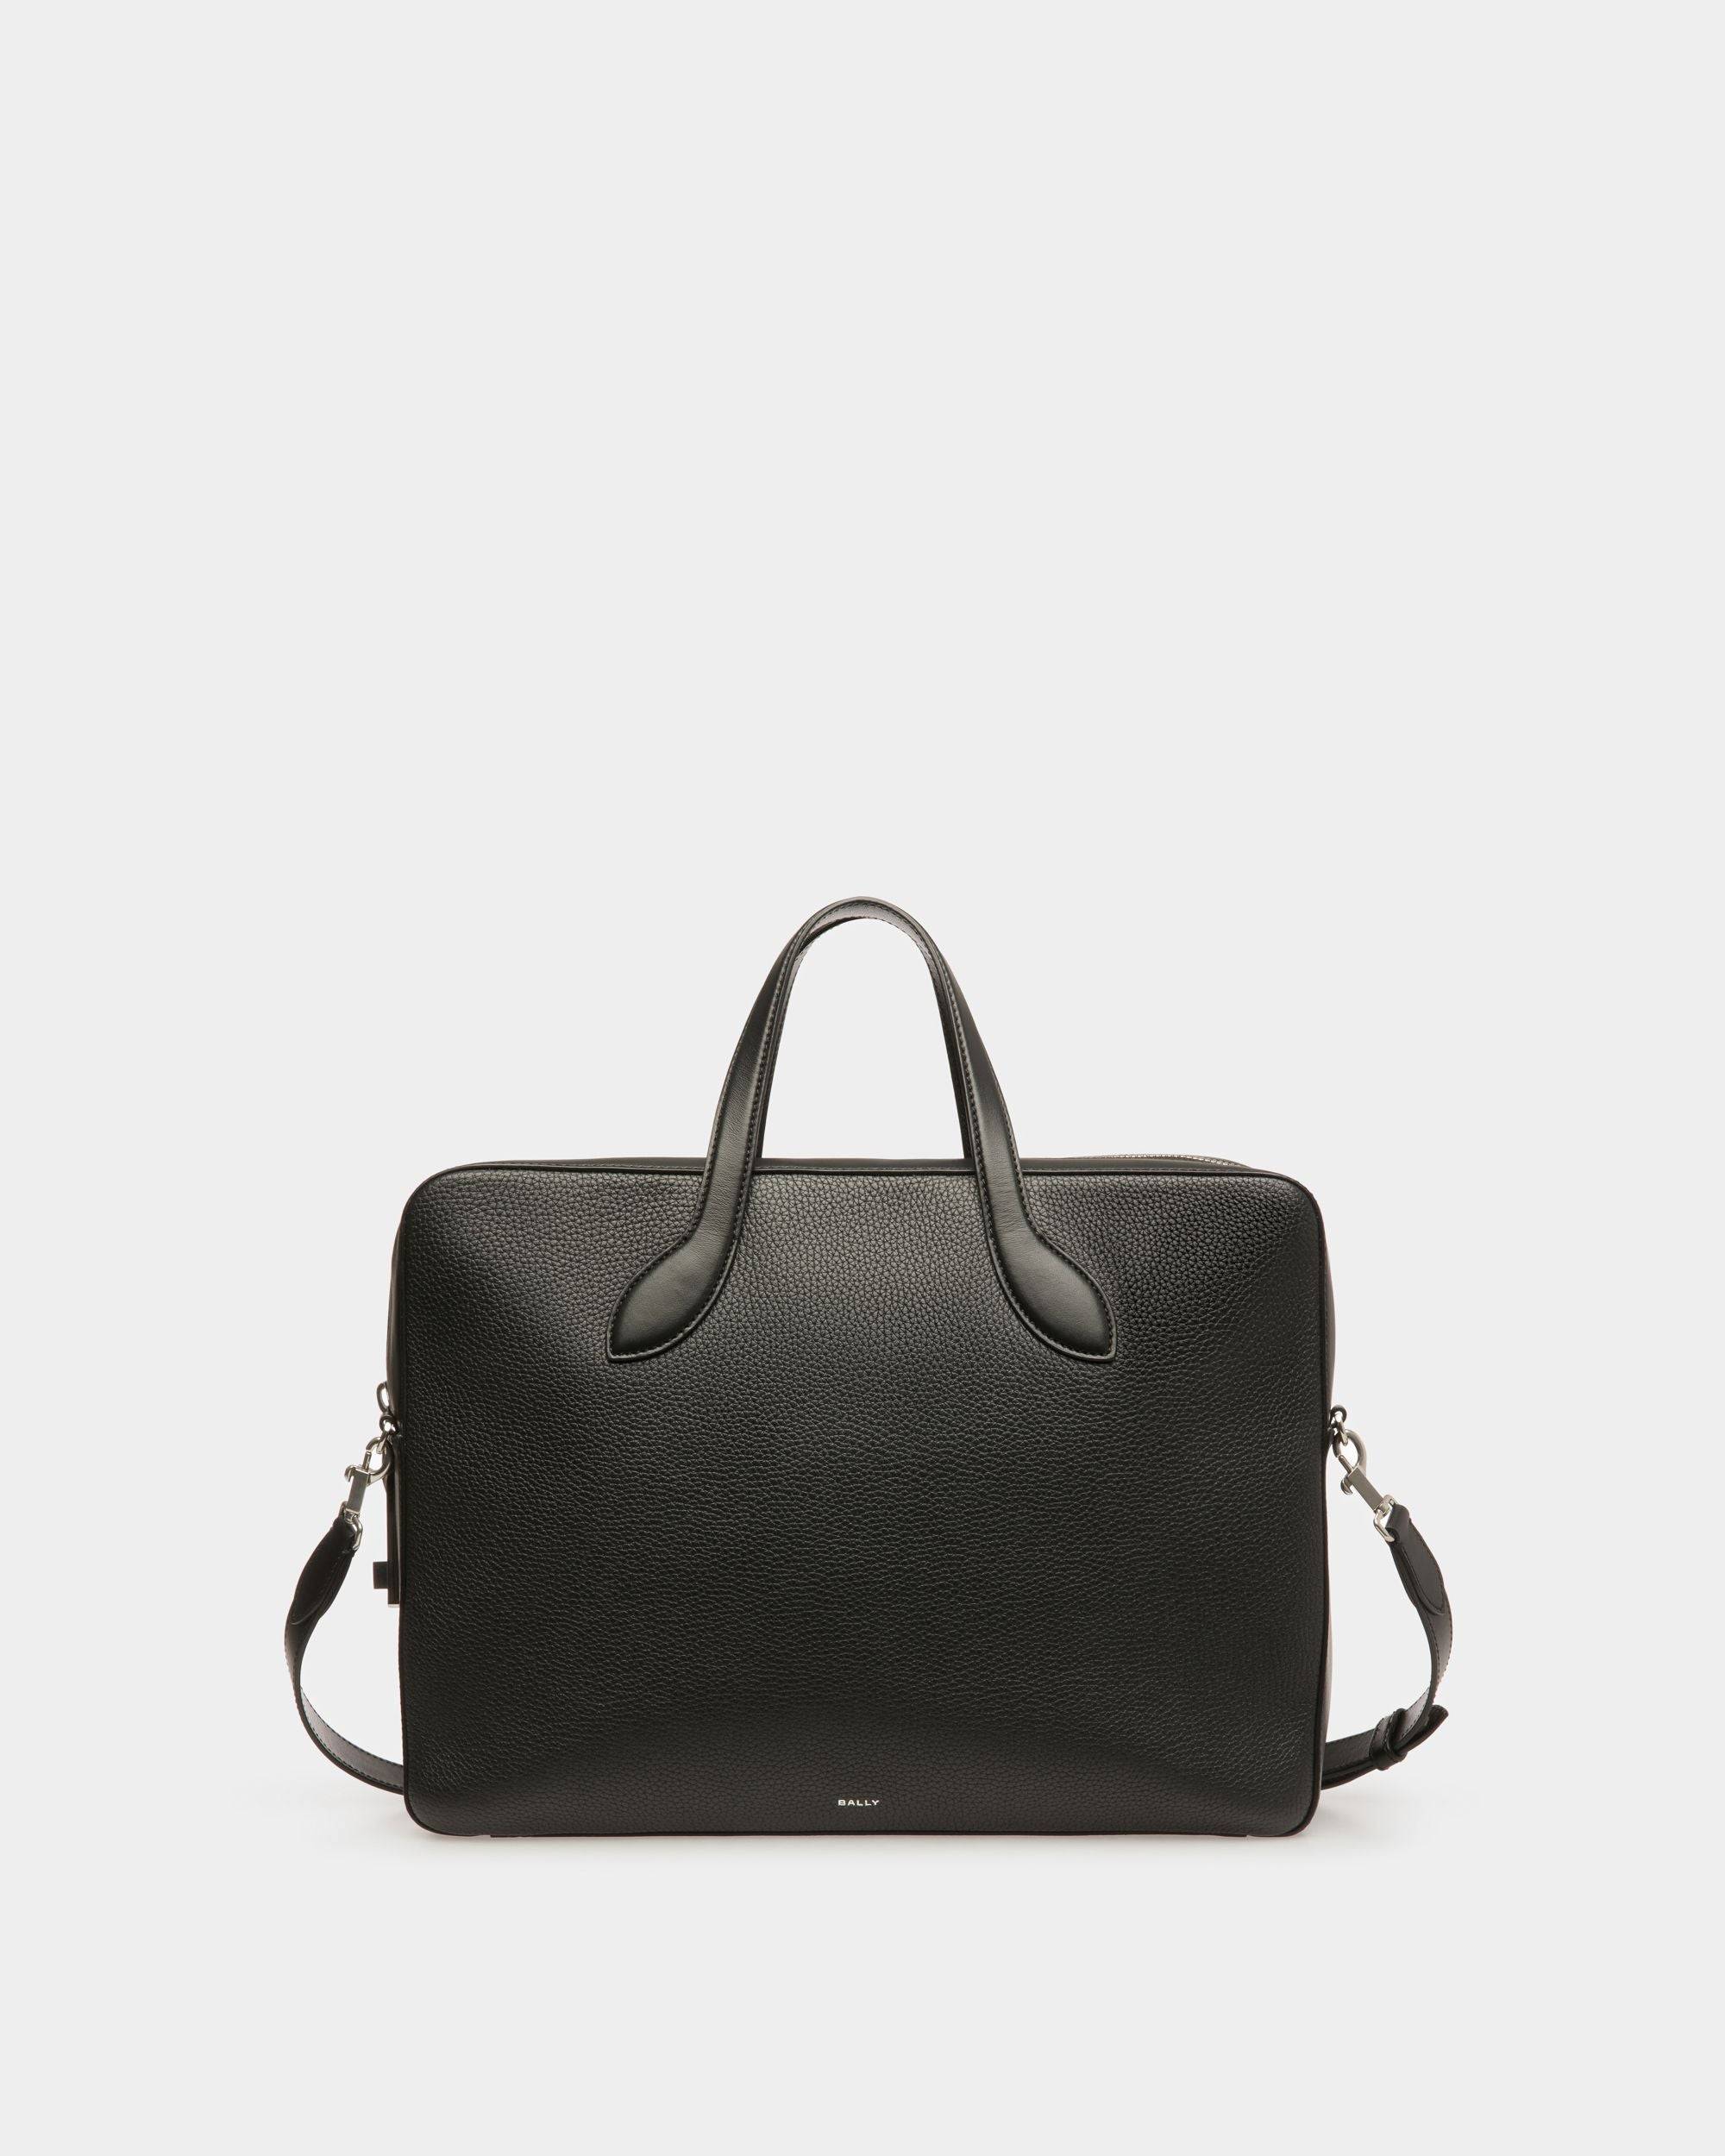 Gentleman | Men's Business Bag | Black Leather | Bally | Still Life Front